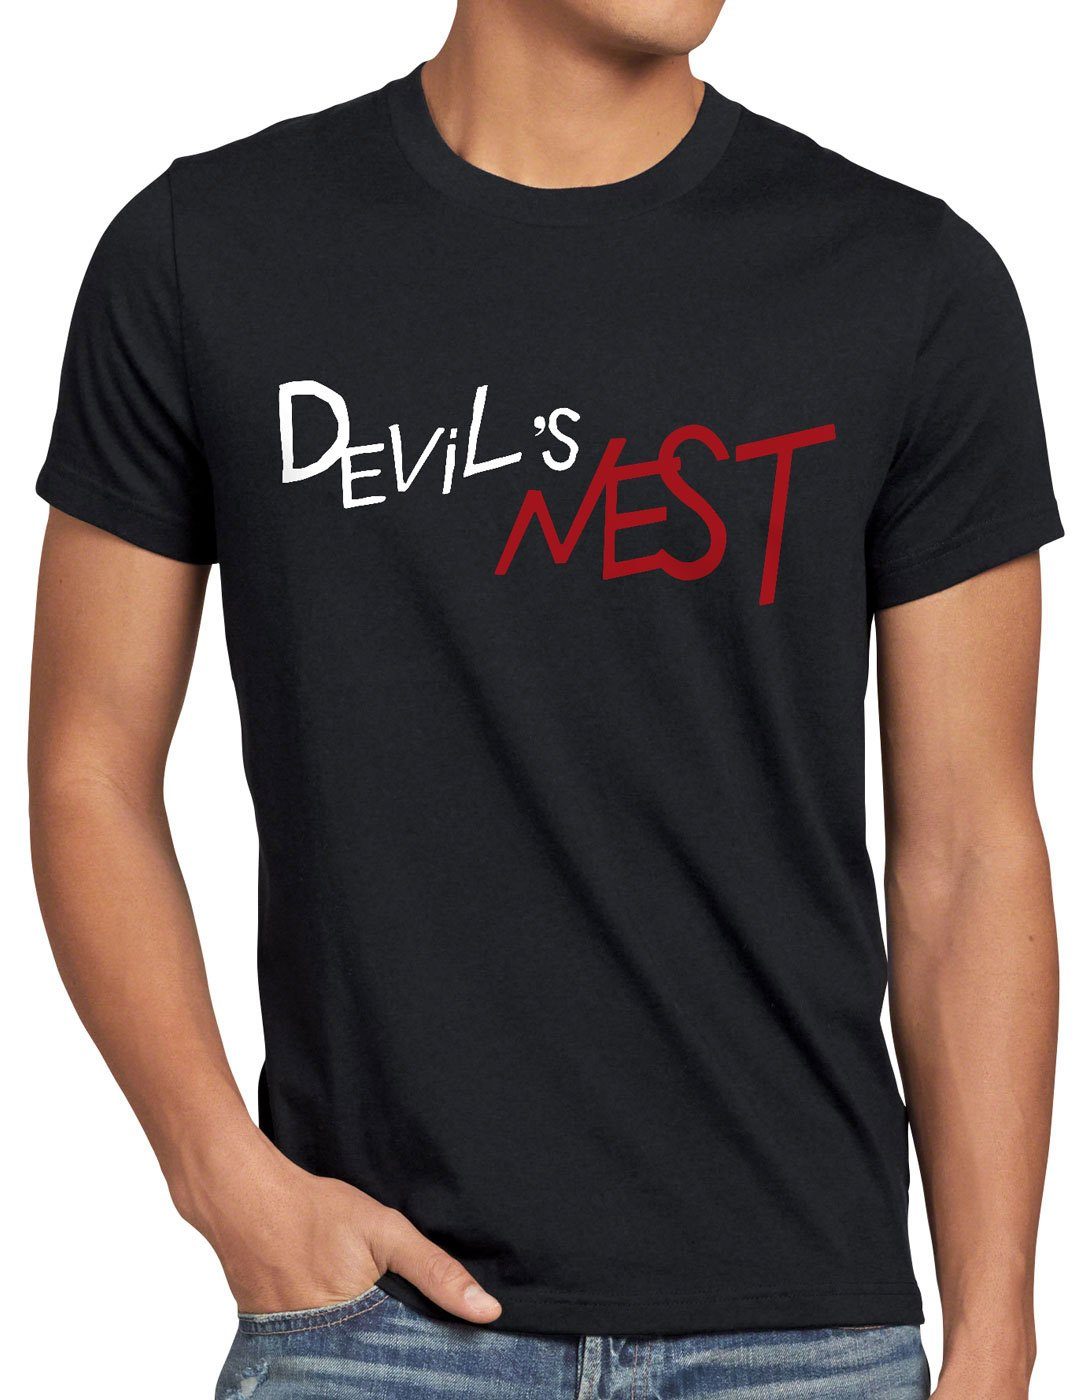 Print-Shirt Devils style3 Herren Nest T-Shirt Fan-Shirt Anime Alchemist schwarz Kostüm Jungen Cosplay